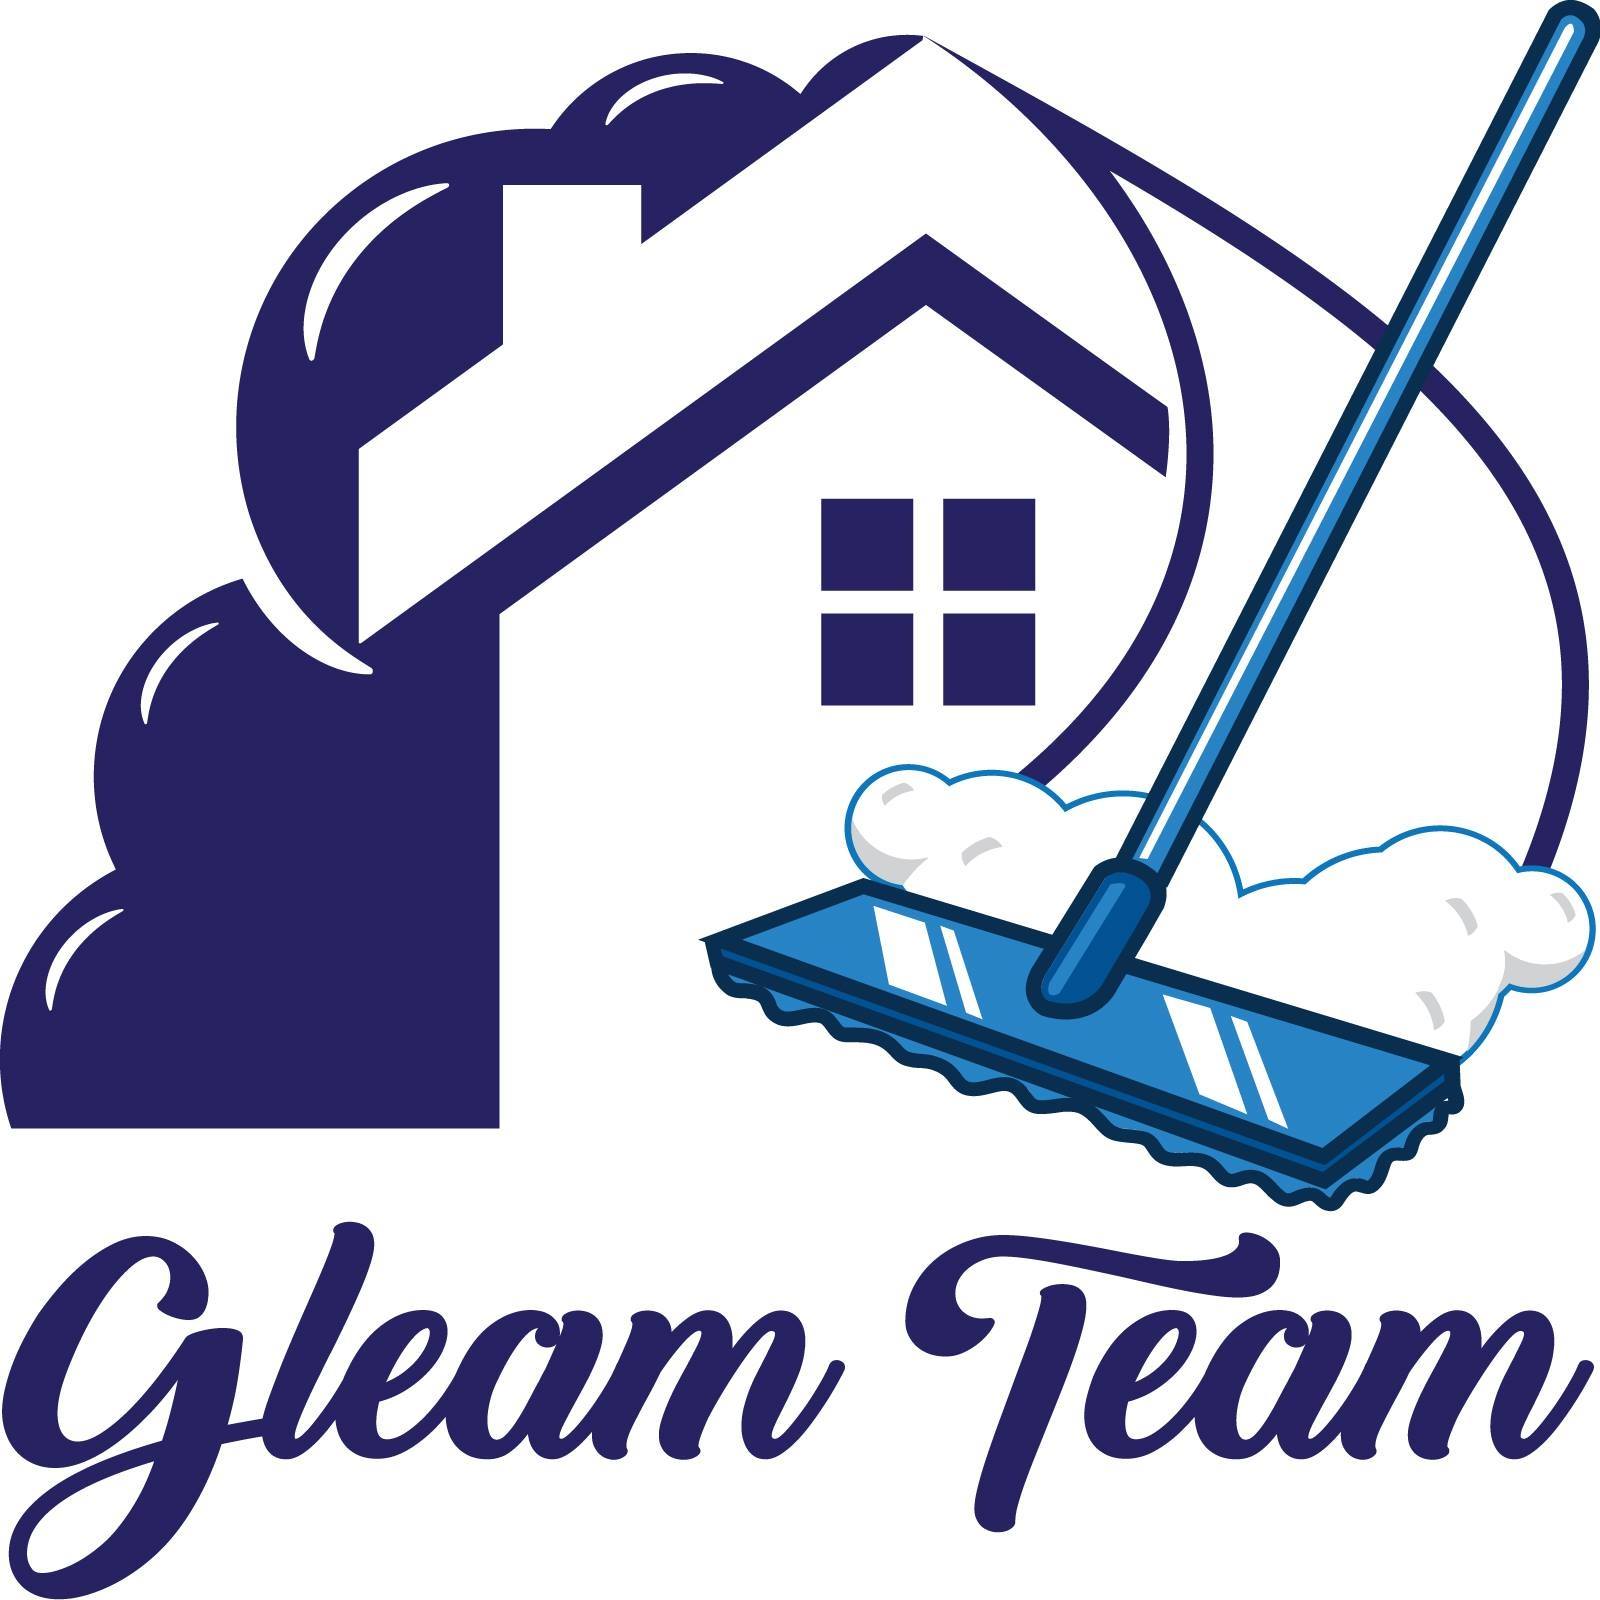 Gleam Team